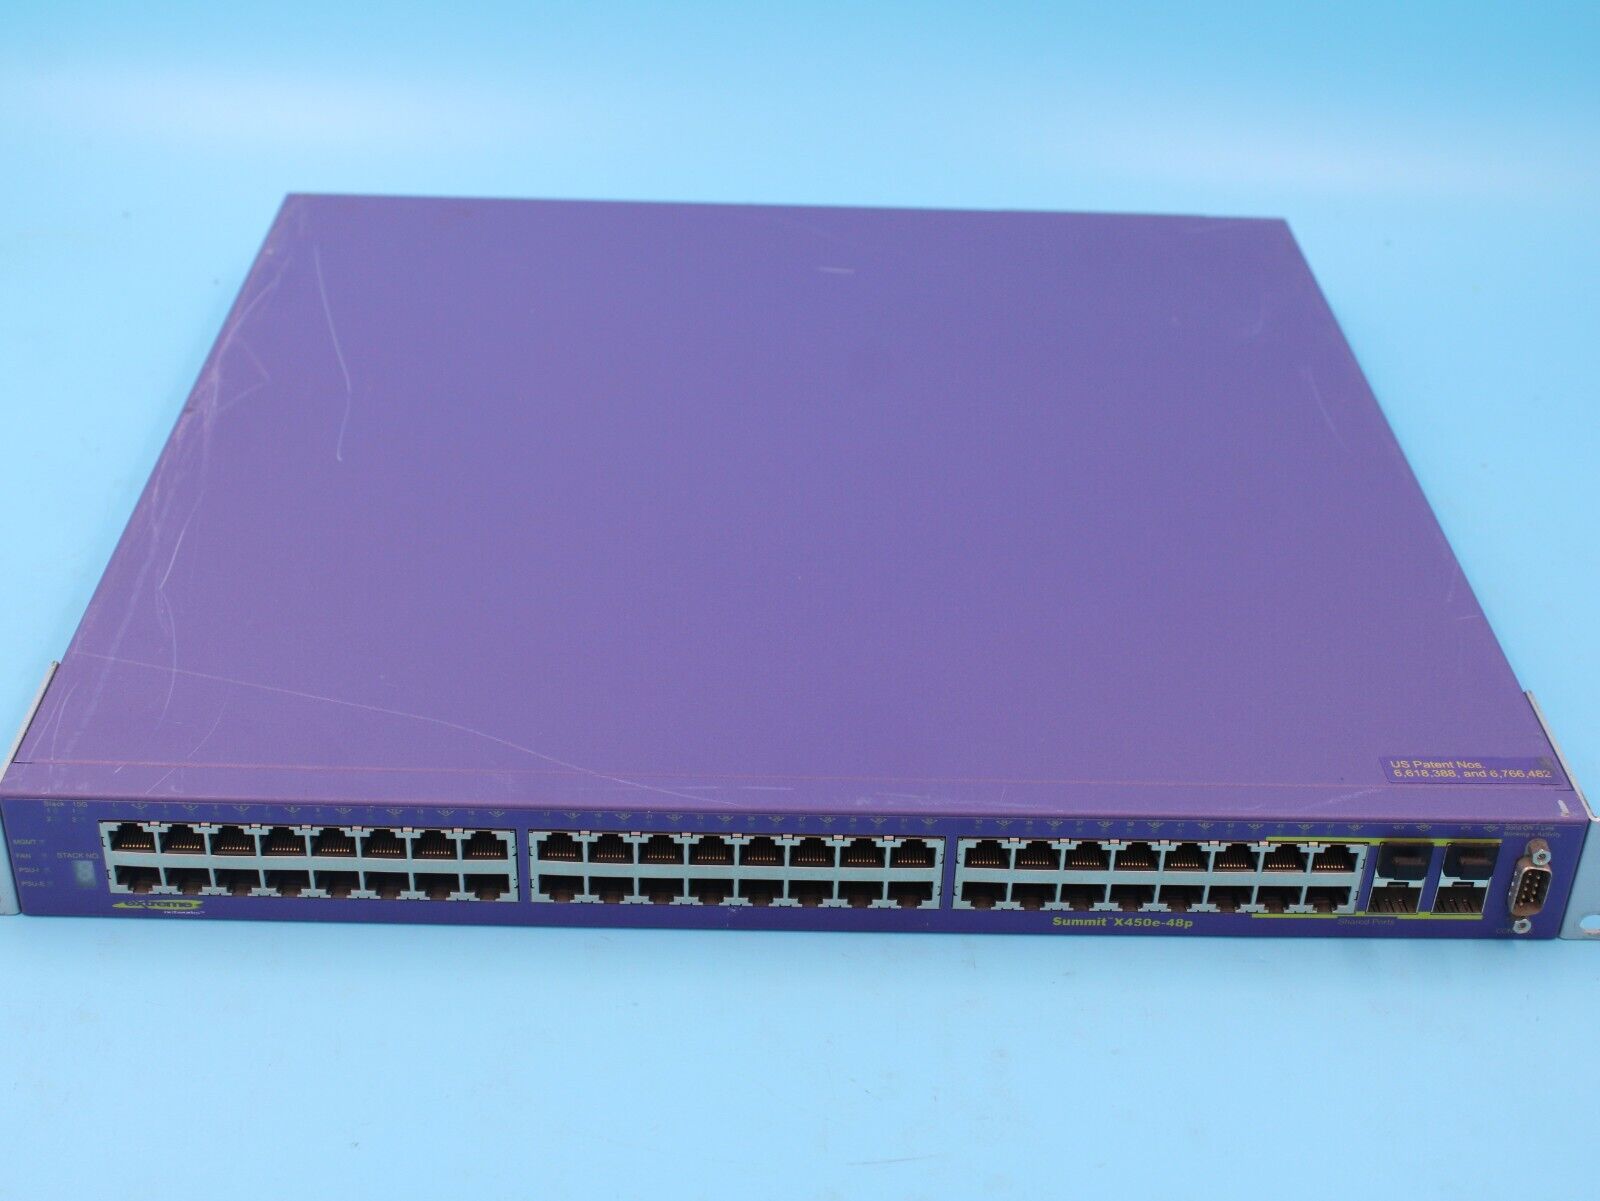 Extreme Networks 16148 Summit Summit X450e-48P 48-Port Gigabit Network Switch